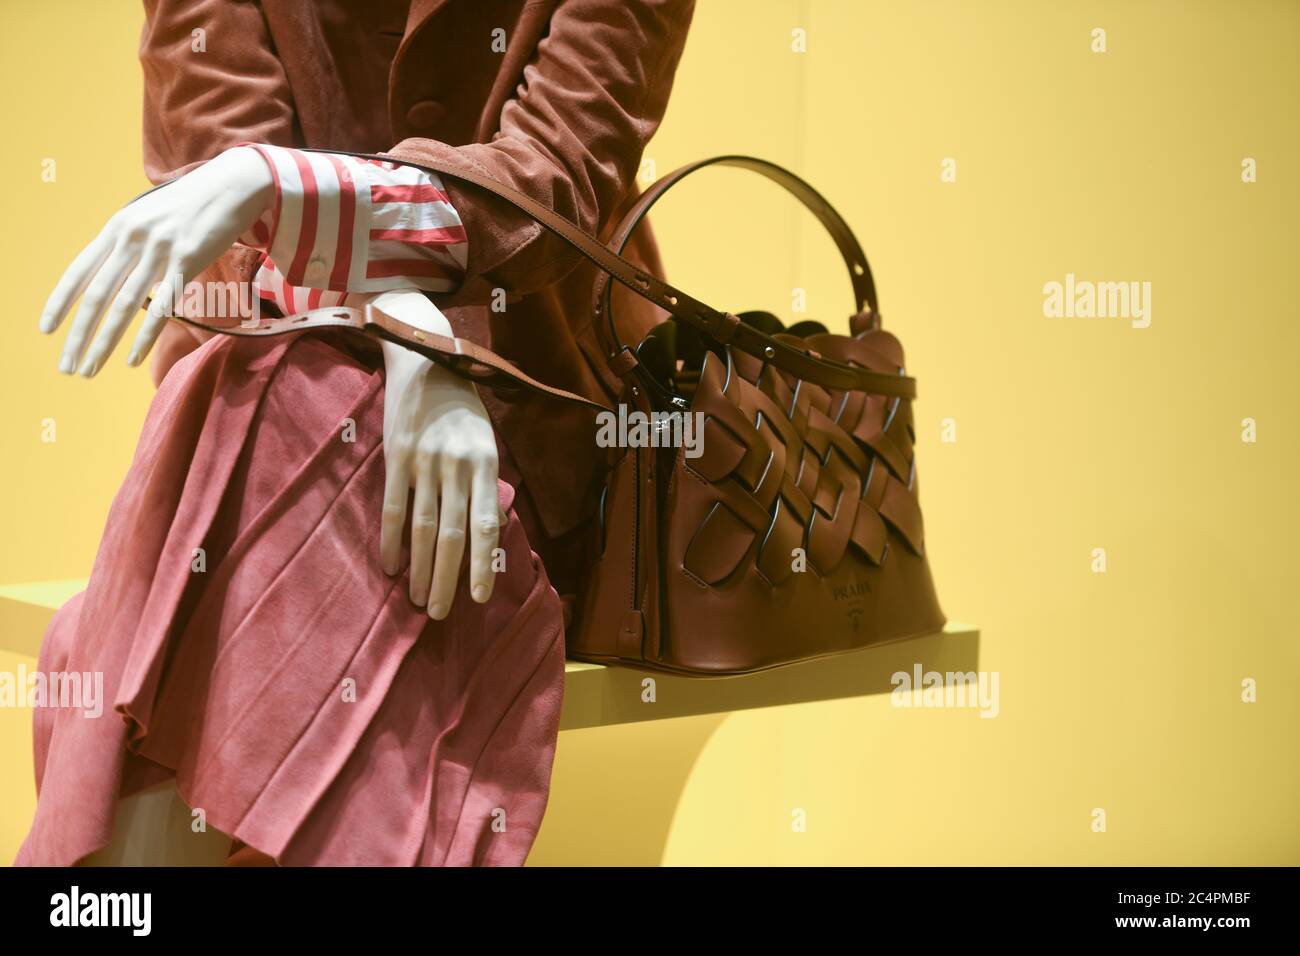 13 Most Popular Bags and Trending Womens Handbags